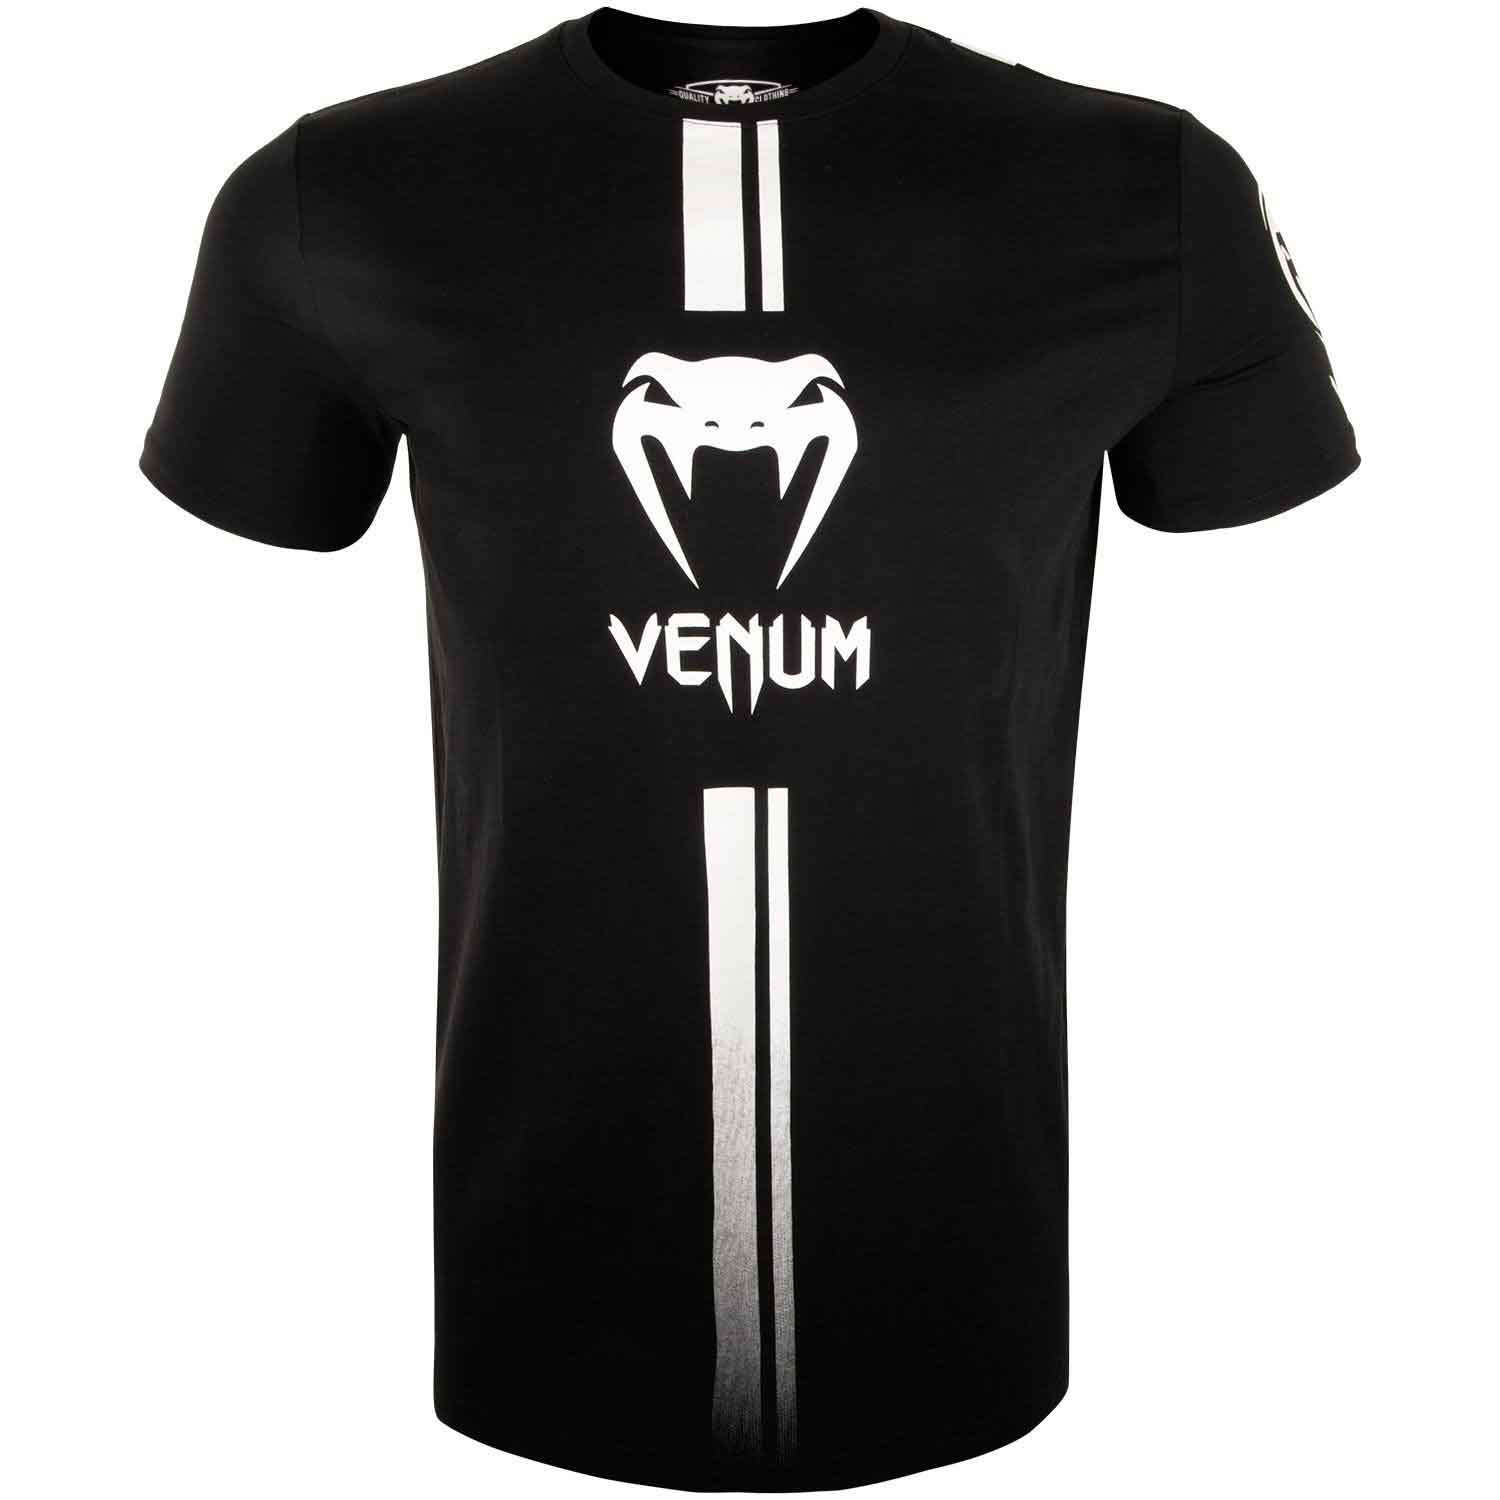 VENUM/ヴェナム Tシャツ VENUM LOGOS/ヴェナム・ロゴス